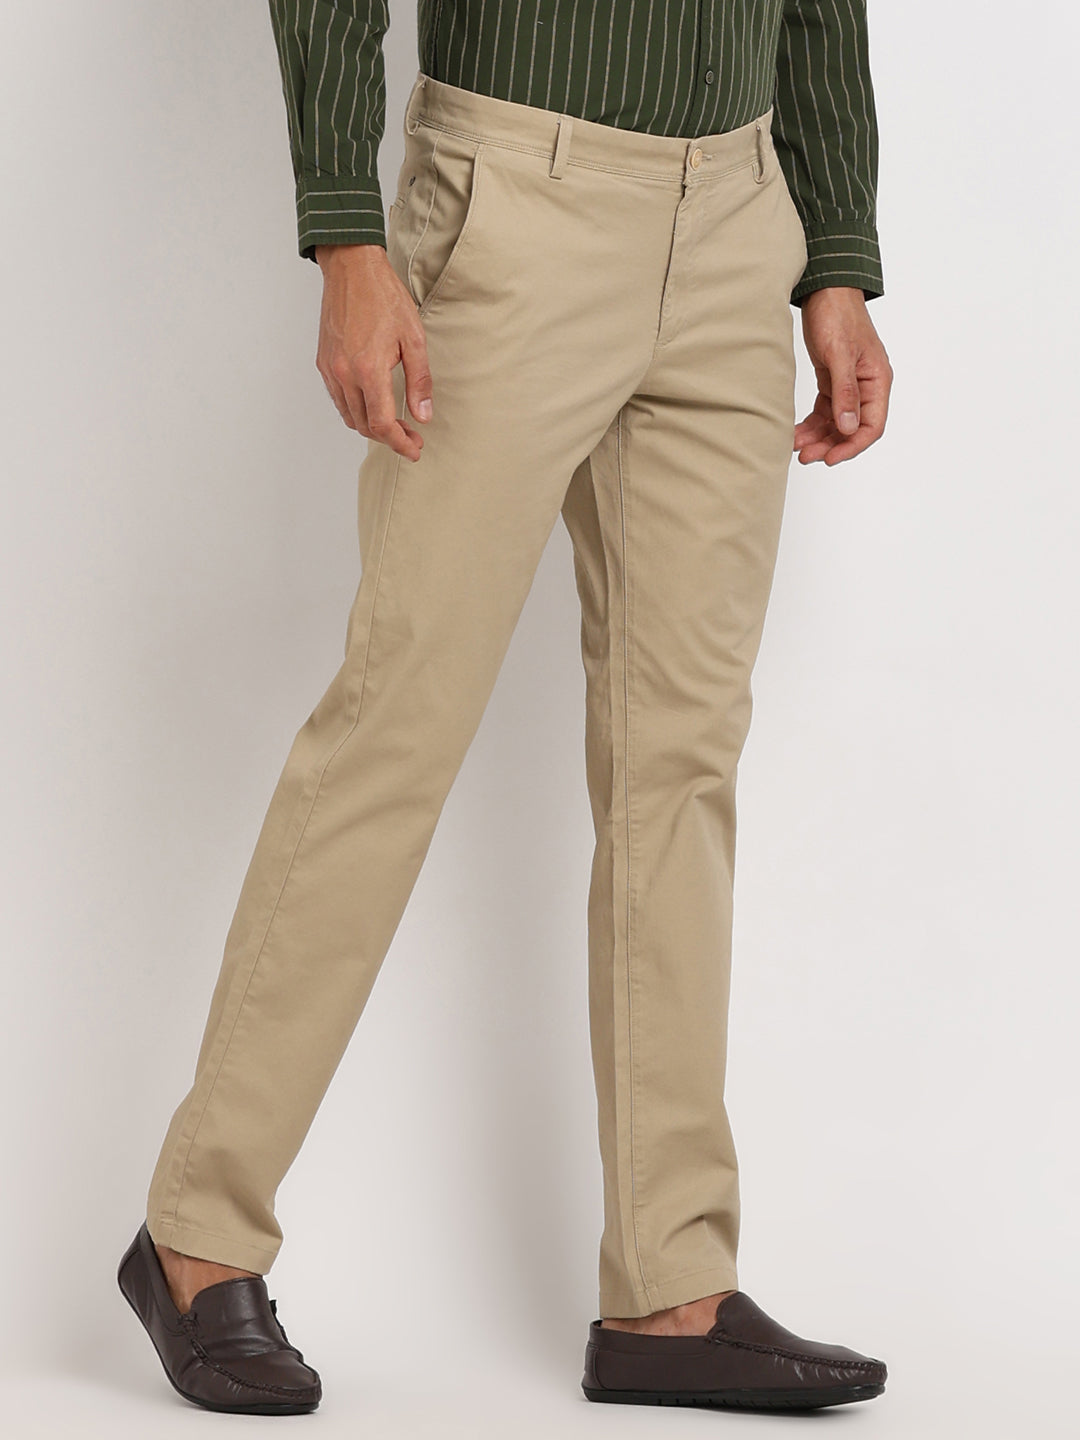 Cotton Stretch Khaki Plain Ultra Slim Fit Flat Front Casual Trouser